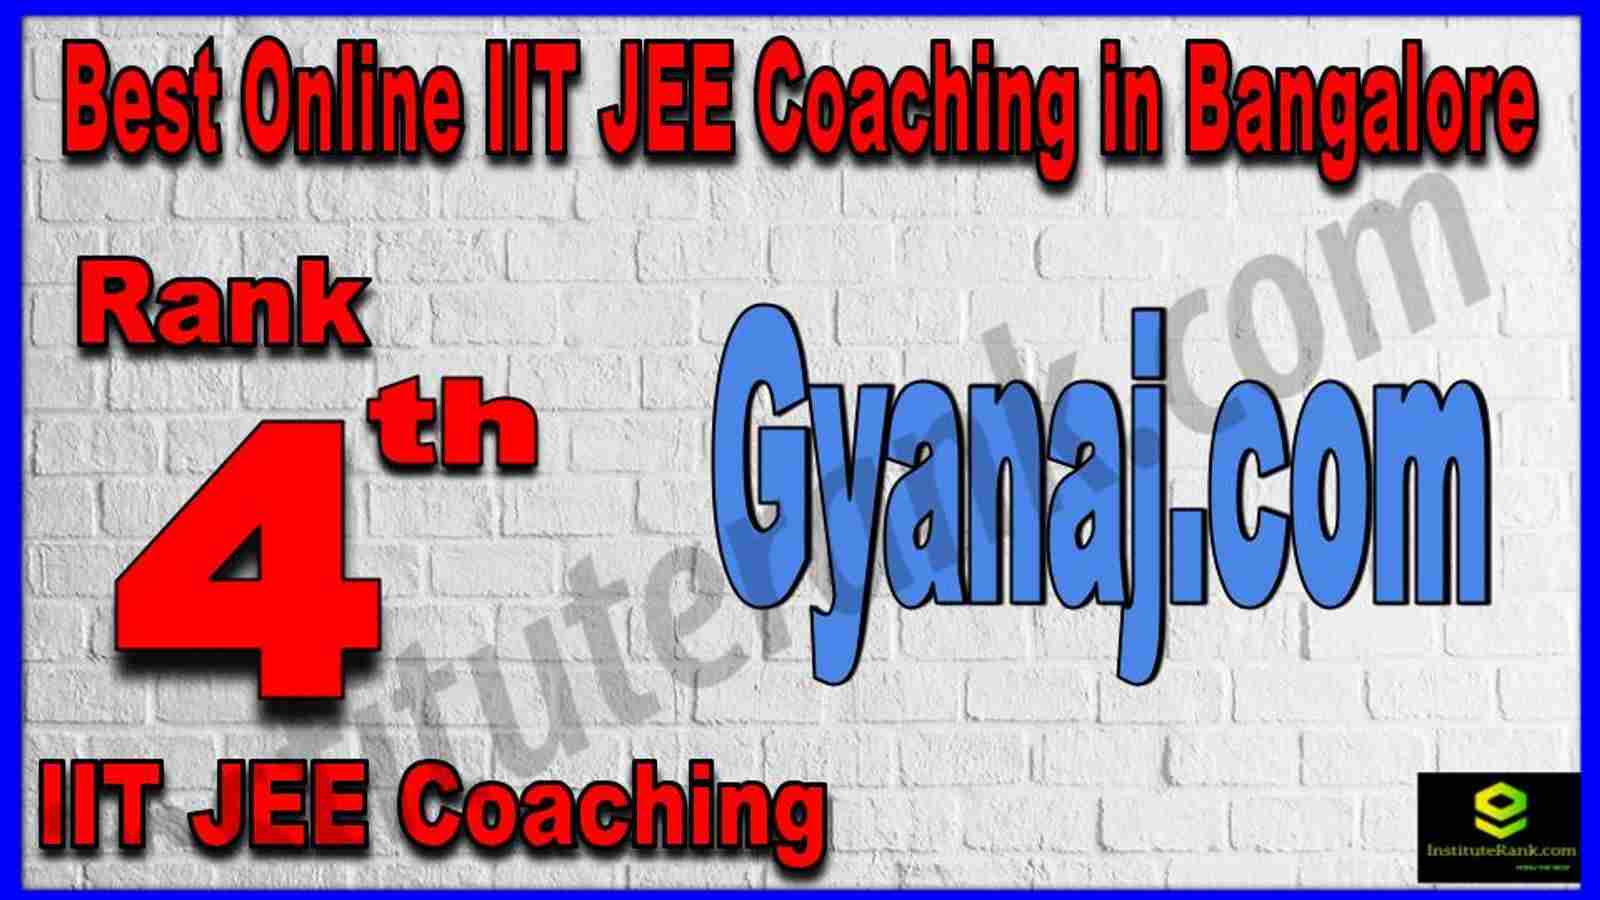 Rank 4th Best Online IIT JEE Coaching in Bangalore